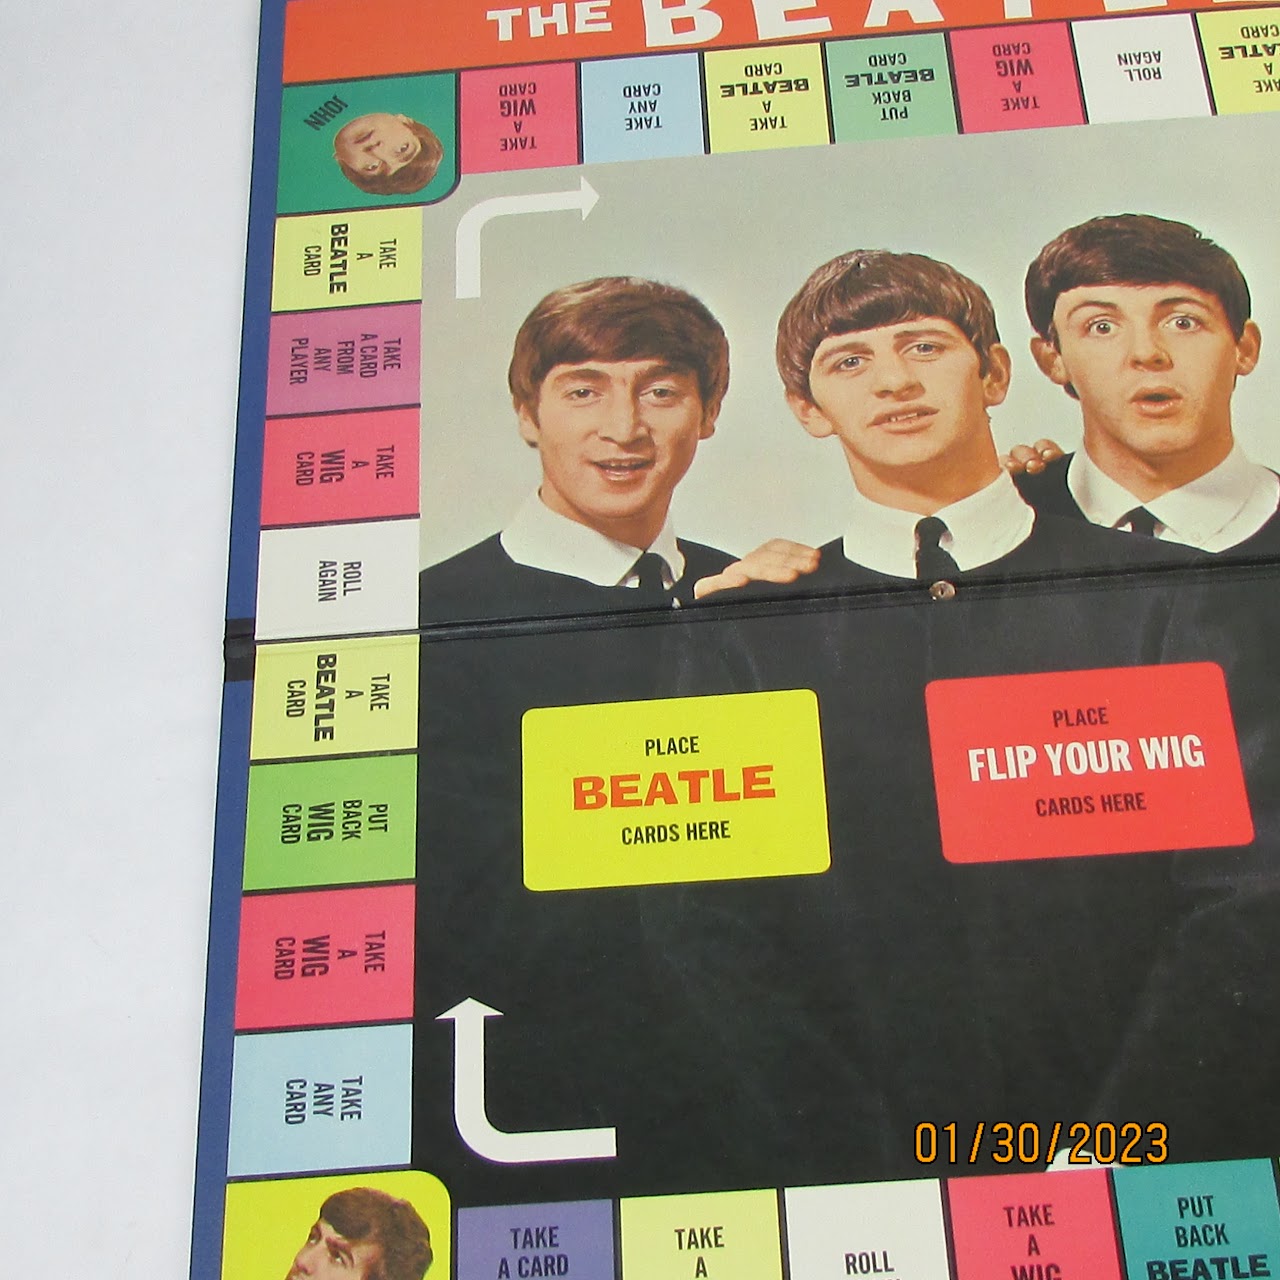 The Beatles 'Flip Your Wig' Vintage Board Game